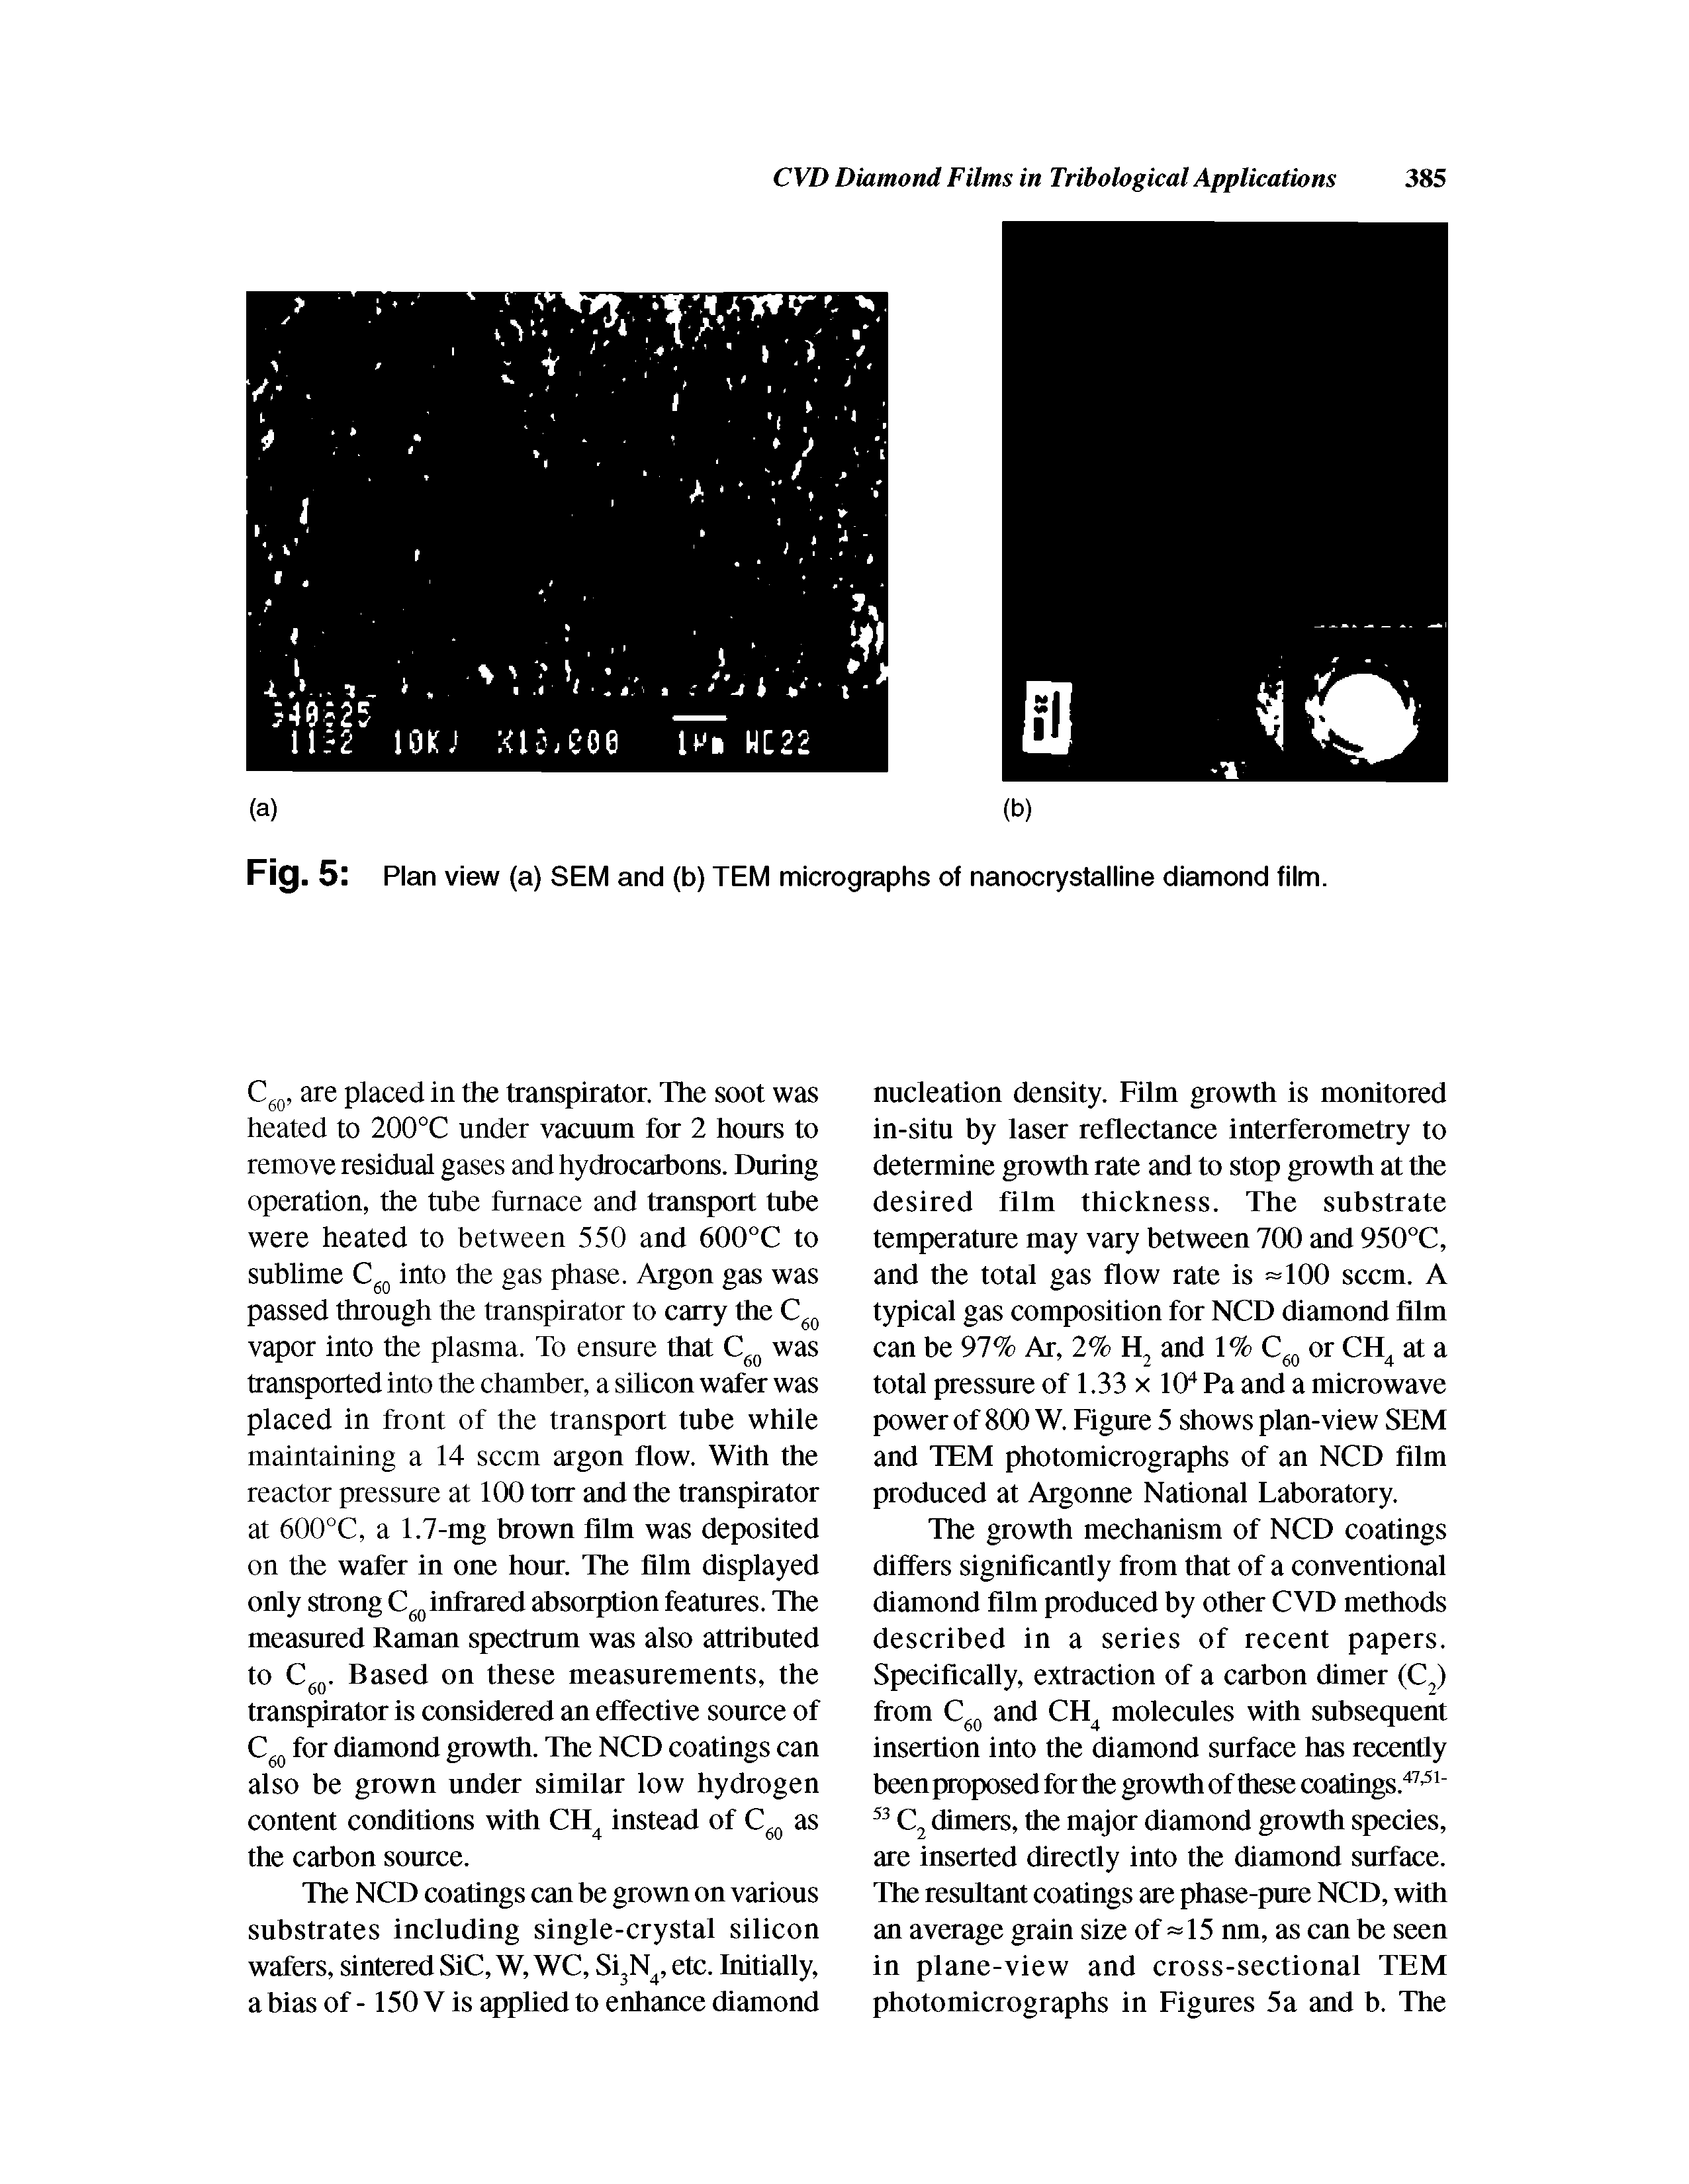 Fig. 5 Plan view (a) SEM and (b) TEM micrographs of nanocrystalline diamond film.